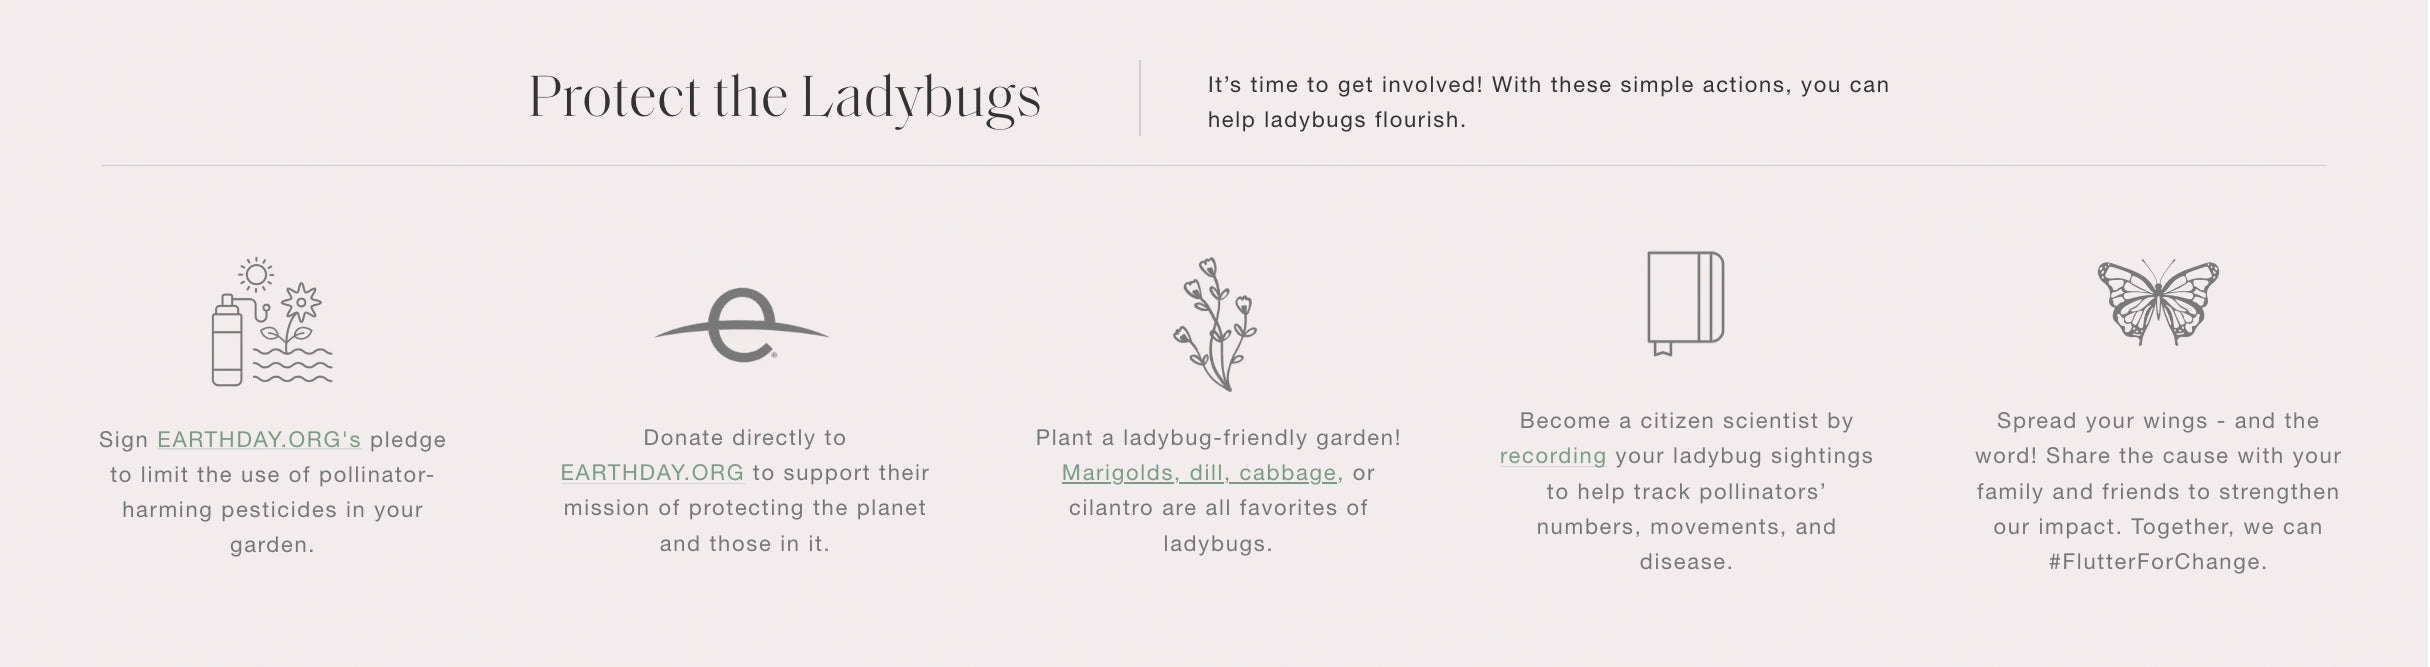 Protect the ladybugs info